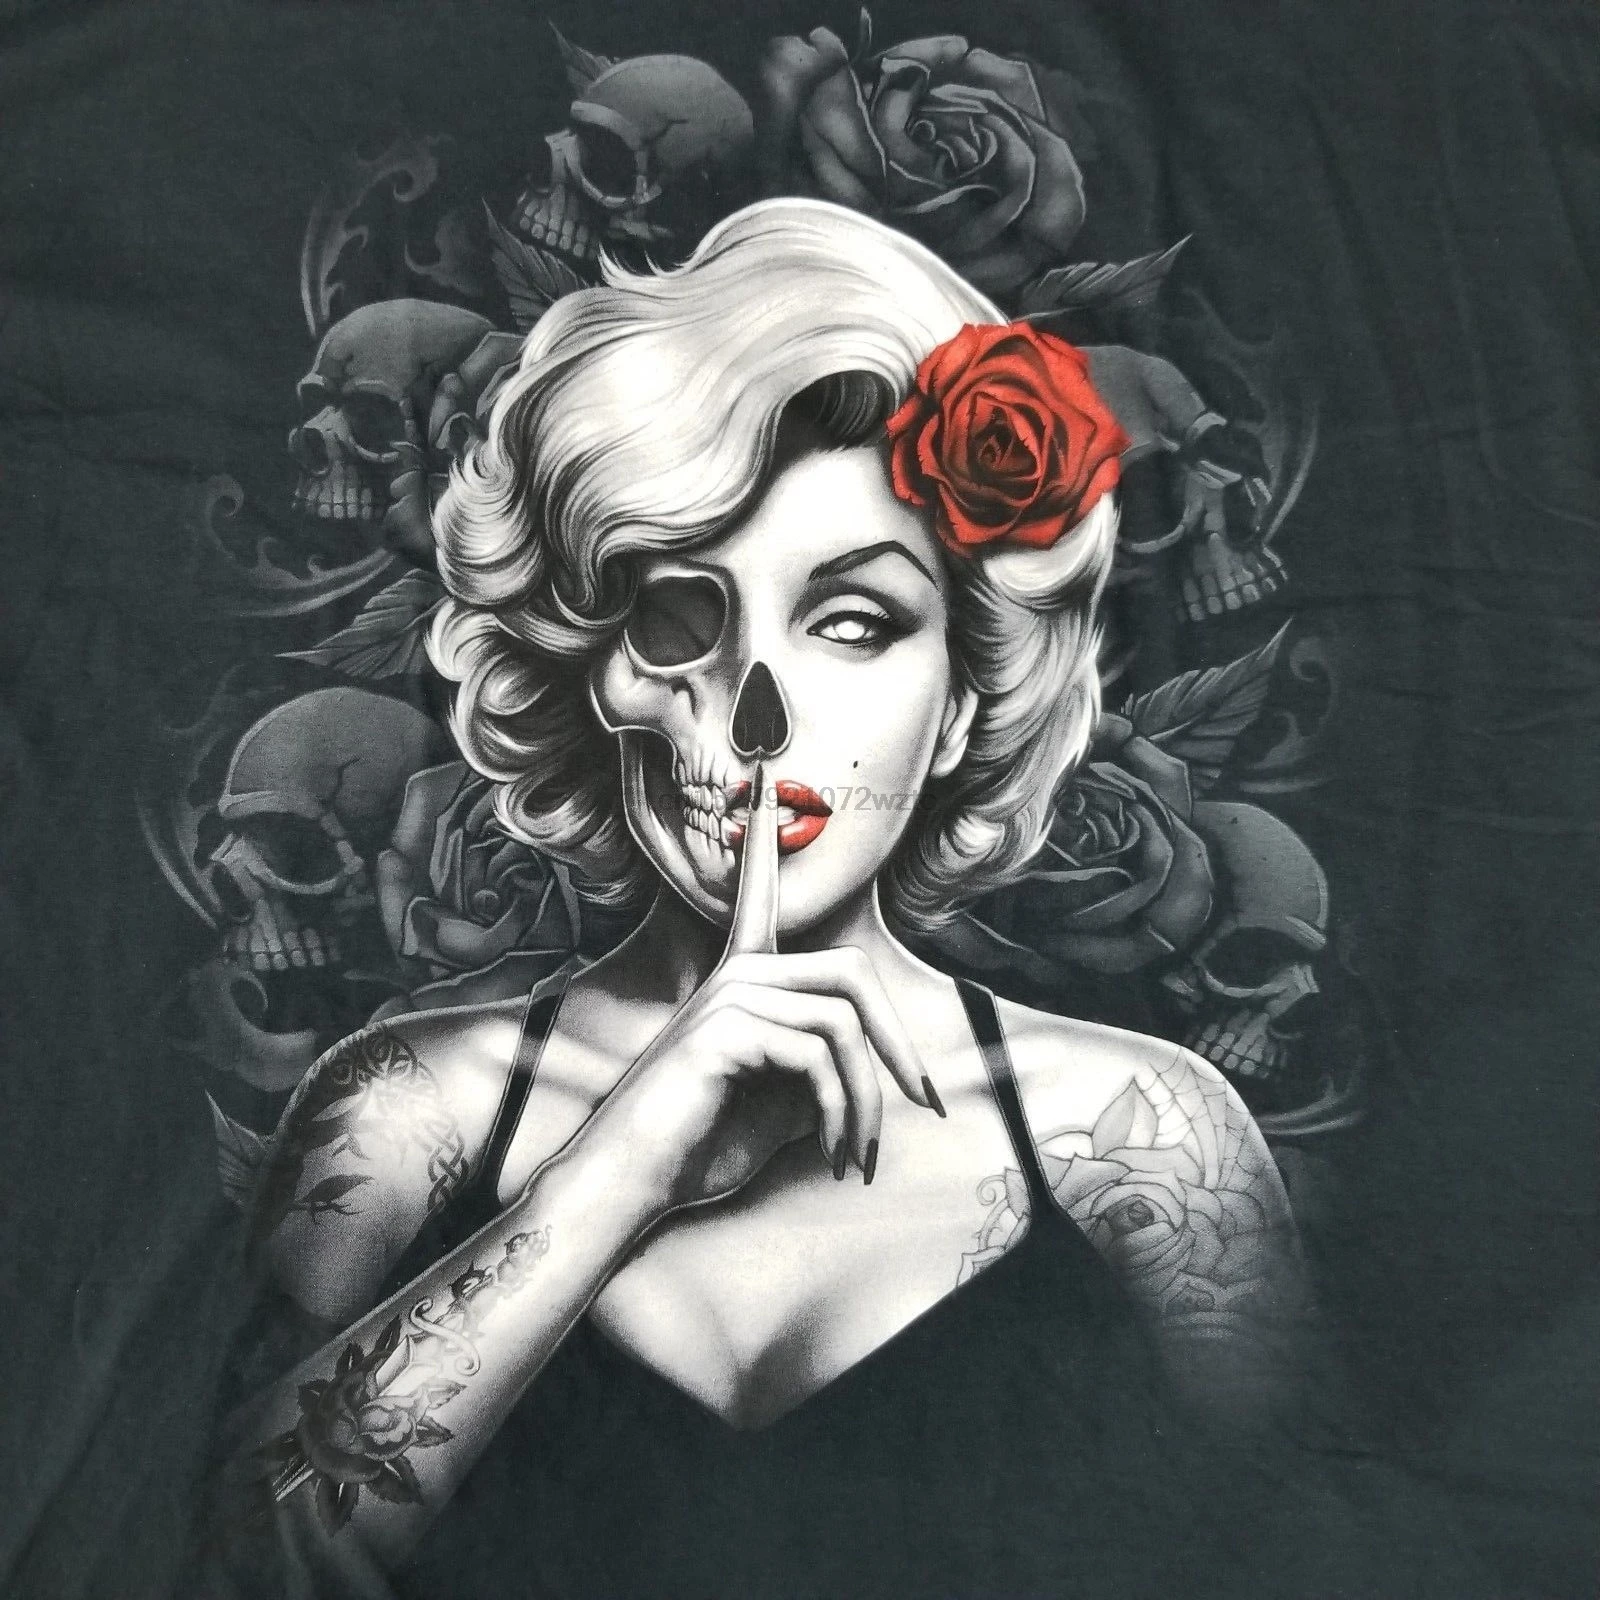 6.99US $ |Marilyn Monroe Men's 2XL T Shirt Tattoo Art Skull Rose Gangs...